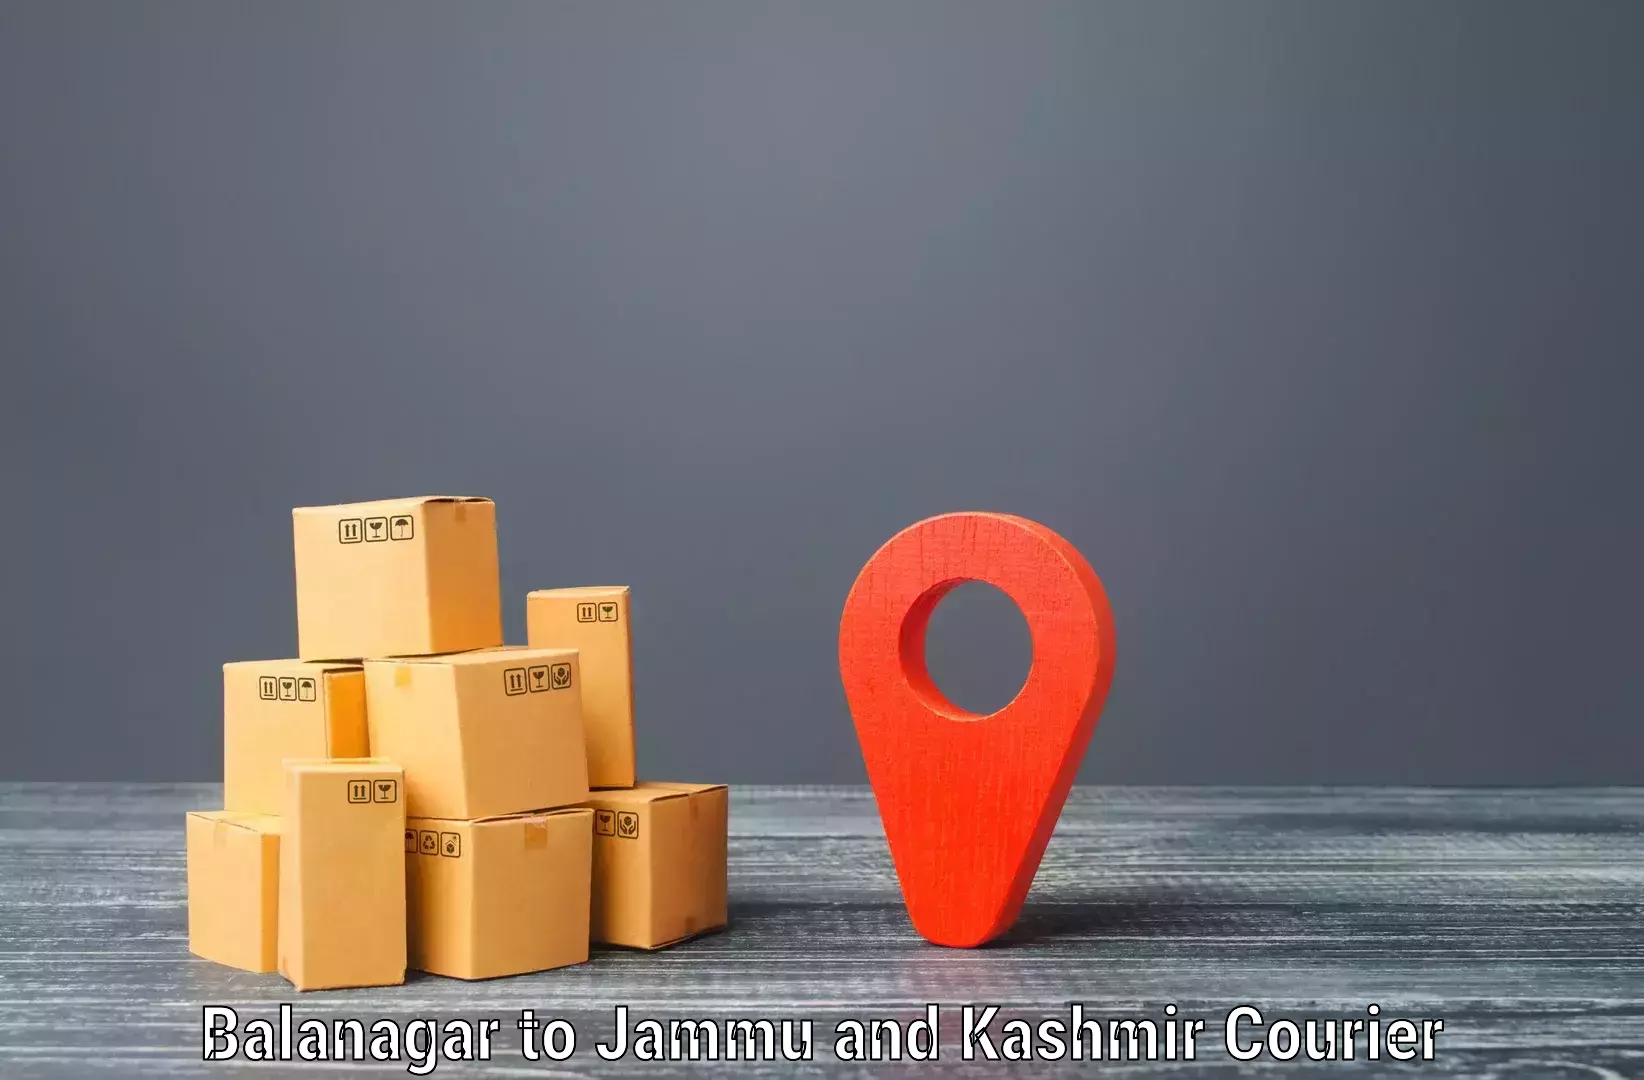 Express courier capabilities Balanagar to Chenani